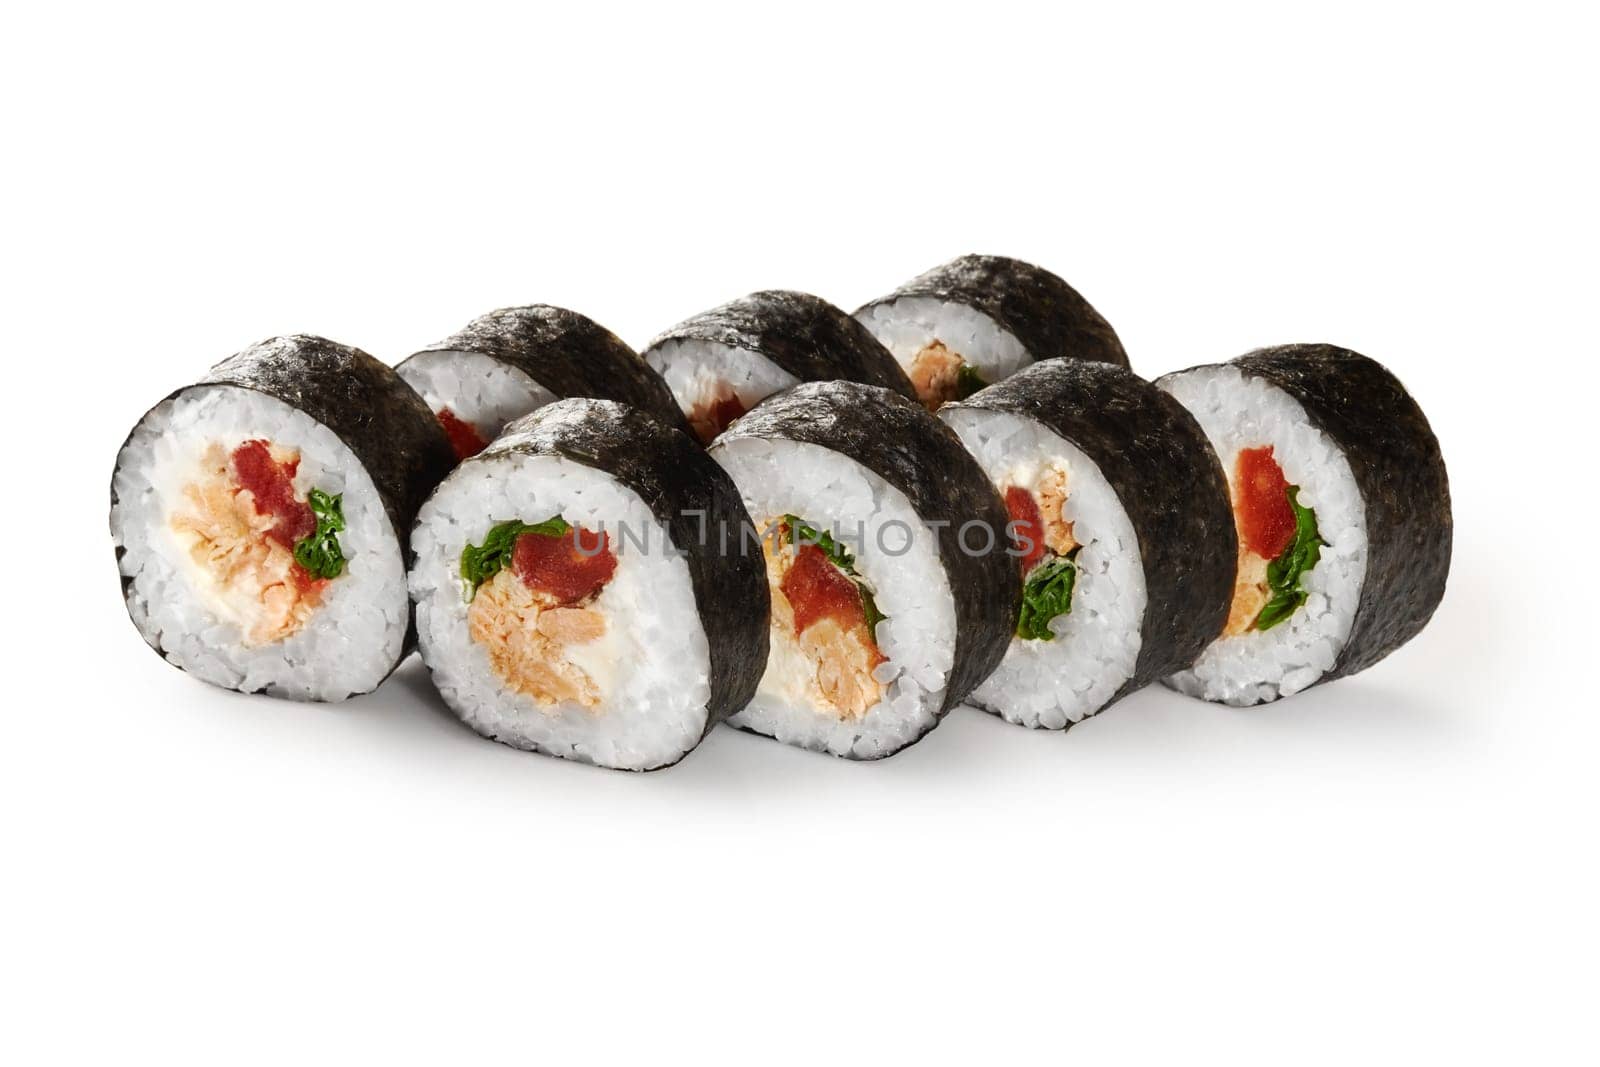 Futomaki rolls with baked salmon on white background by nazarovsergey